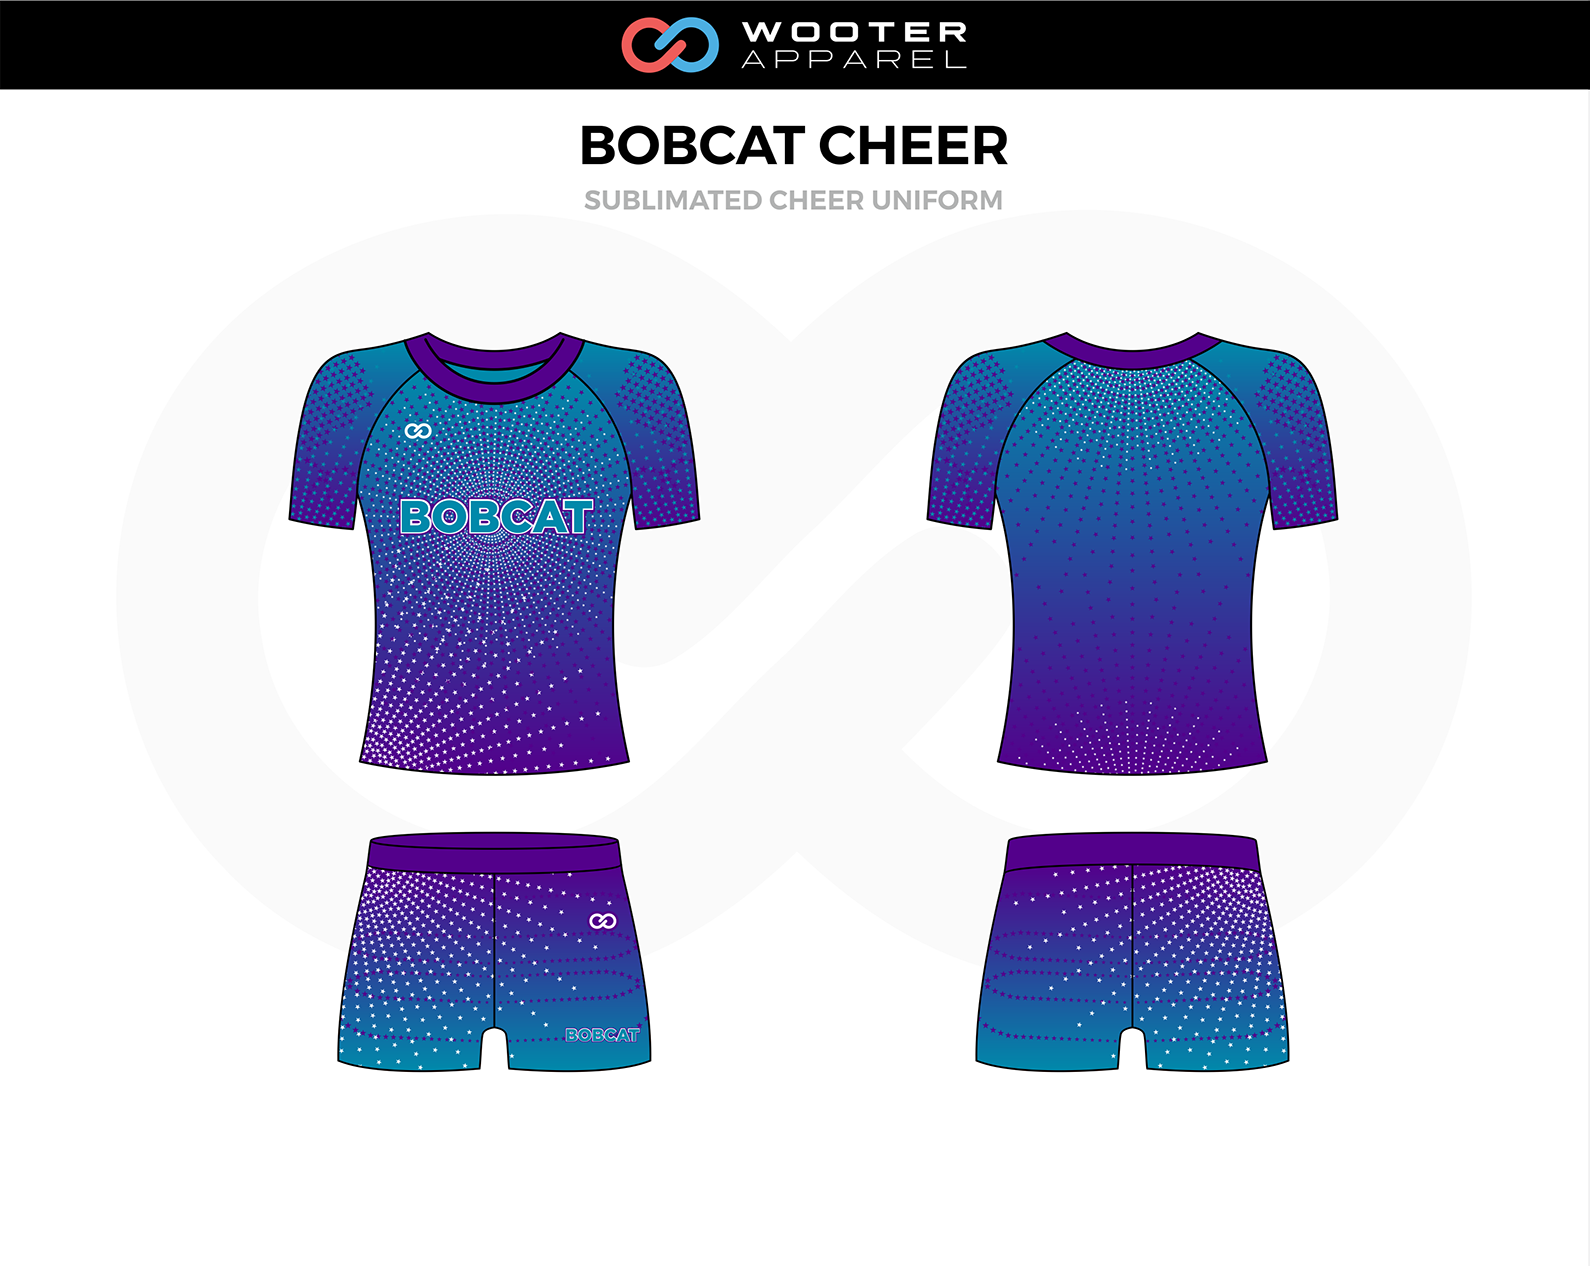 Bobcat Custom Cheer Uniforms	